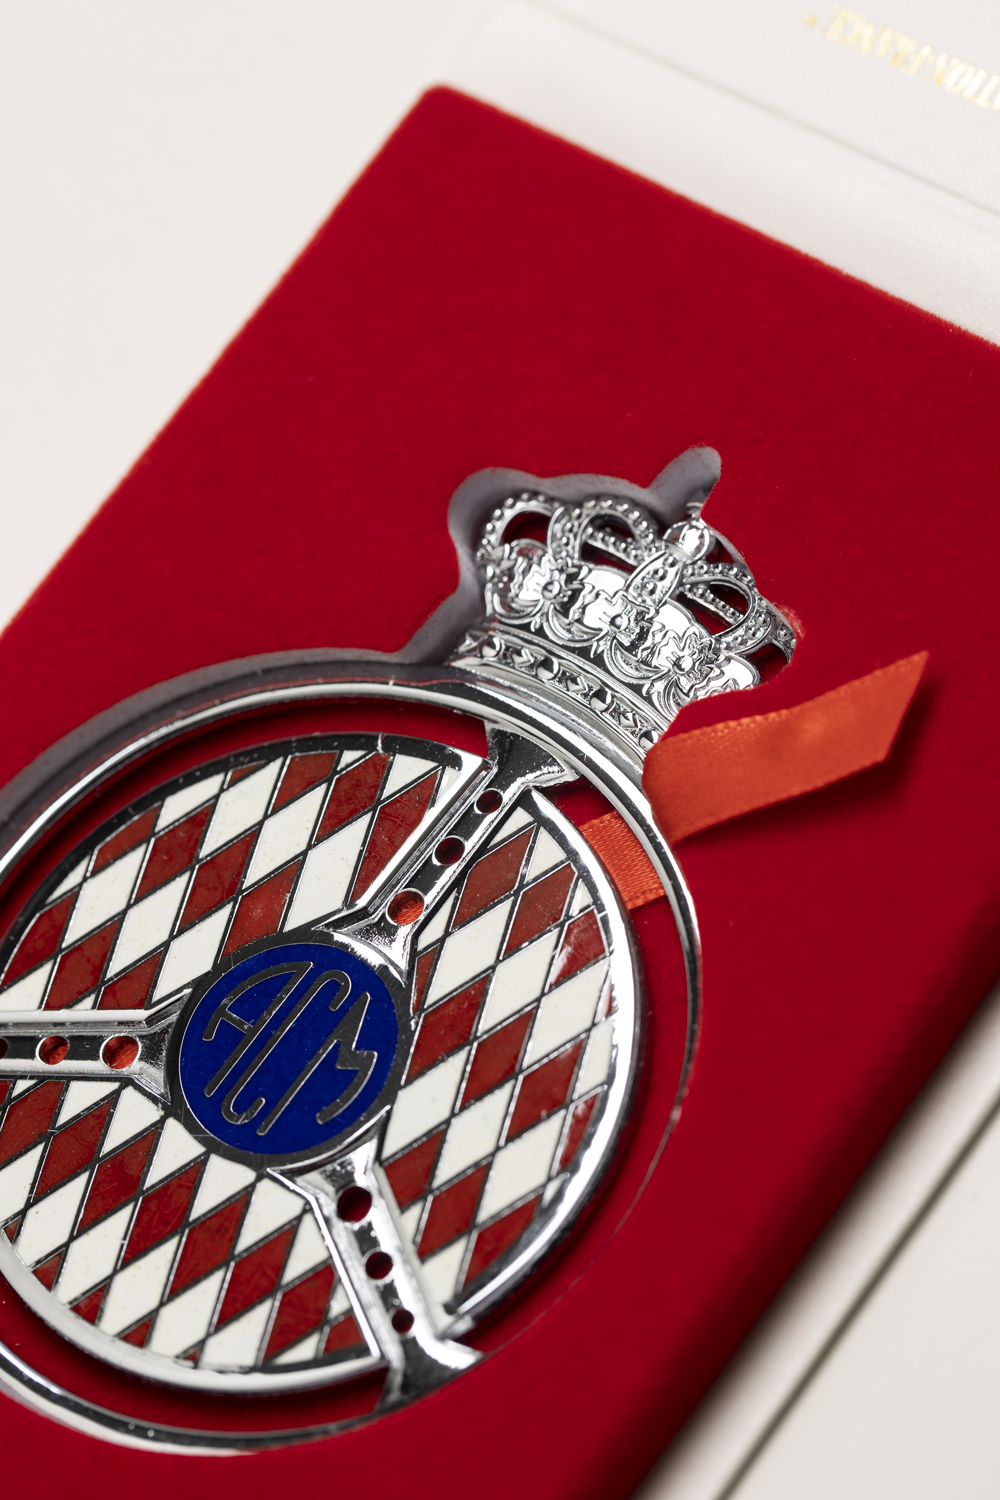 Automobile Club of Monaco car grille badge - superb